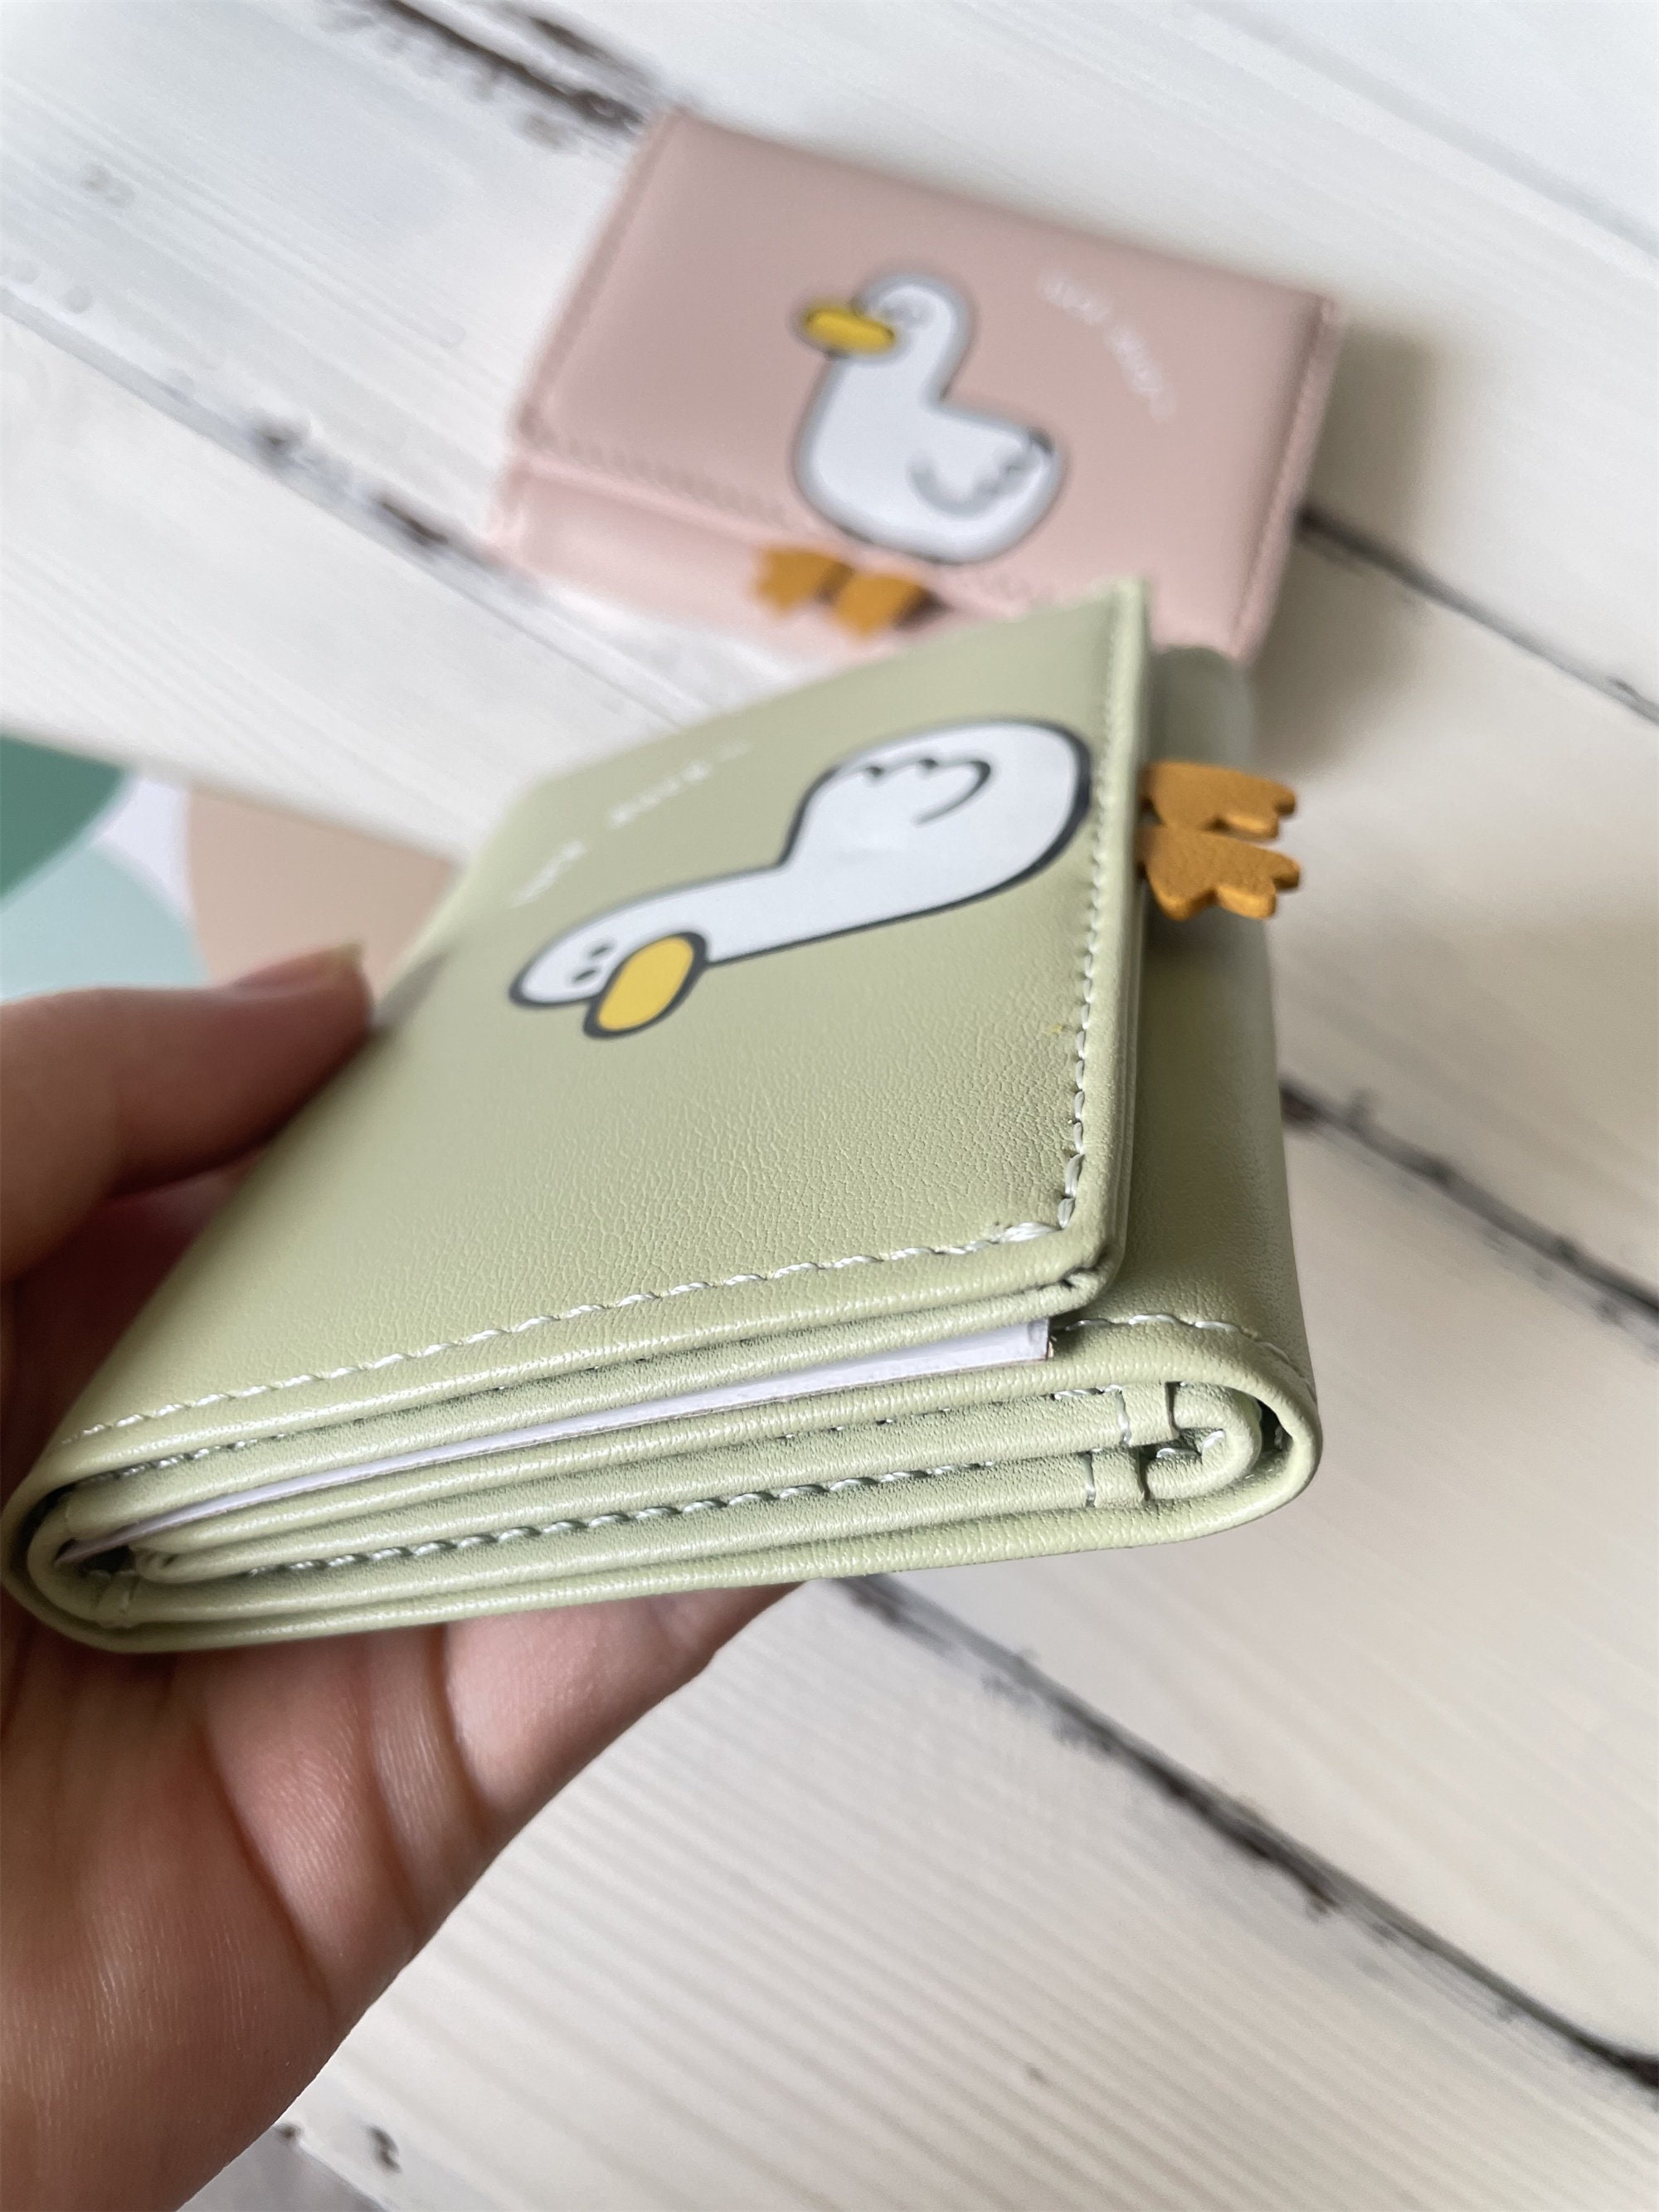 Cute Kawaii Luck Duck Small Wallet/coin Purse/card Holder/gift For Birthday